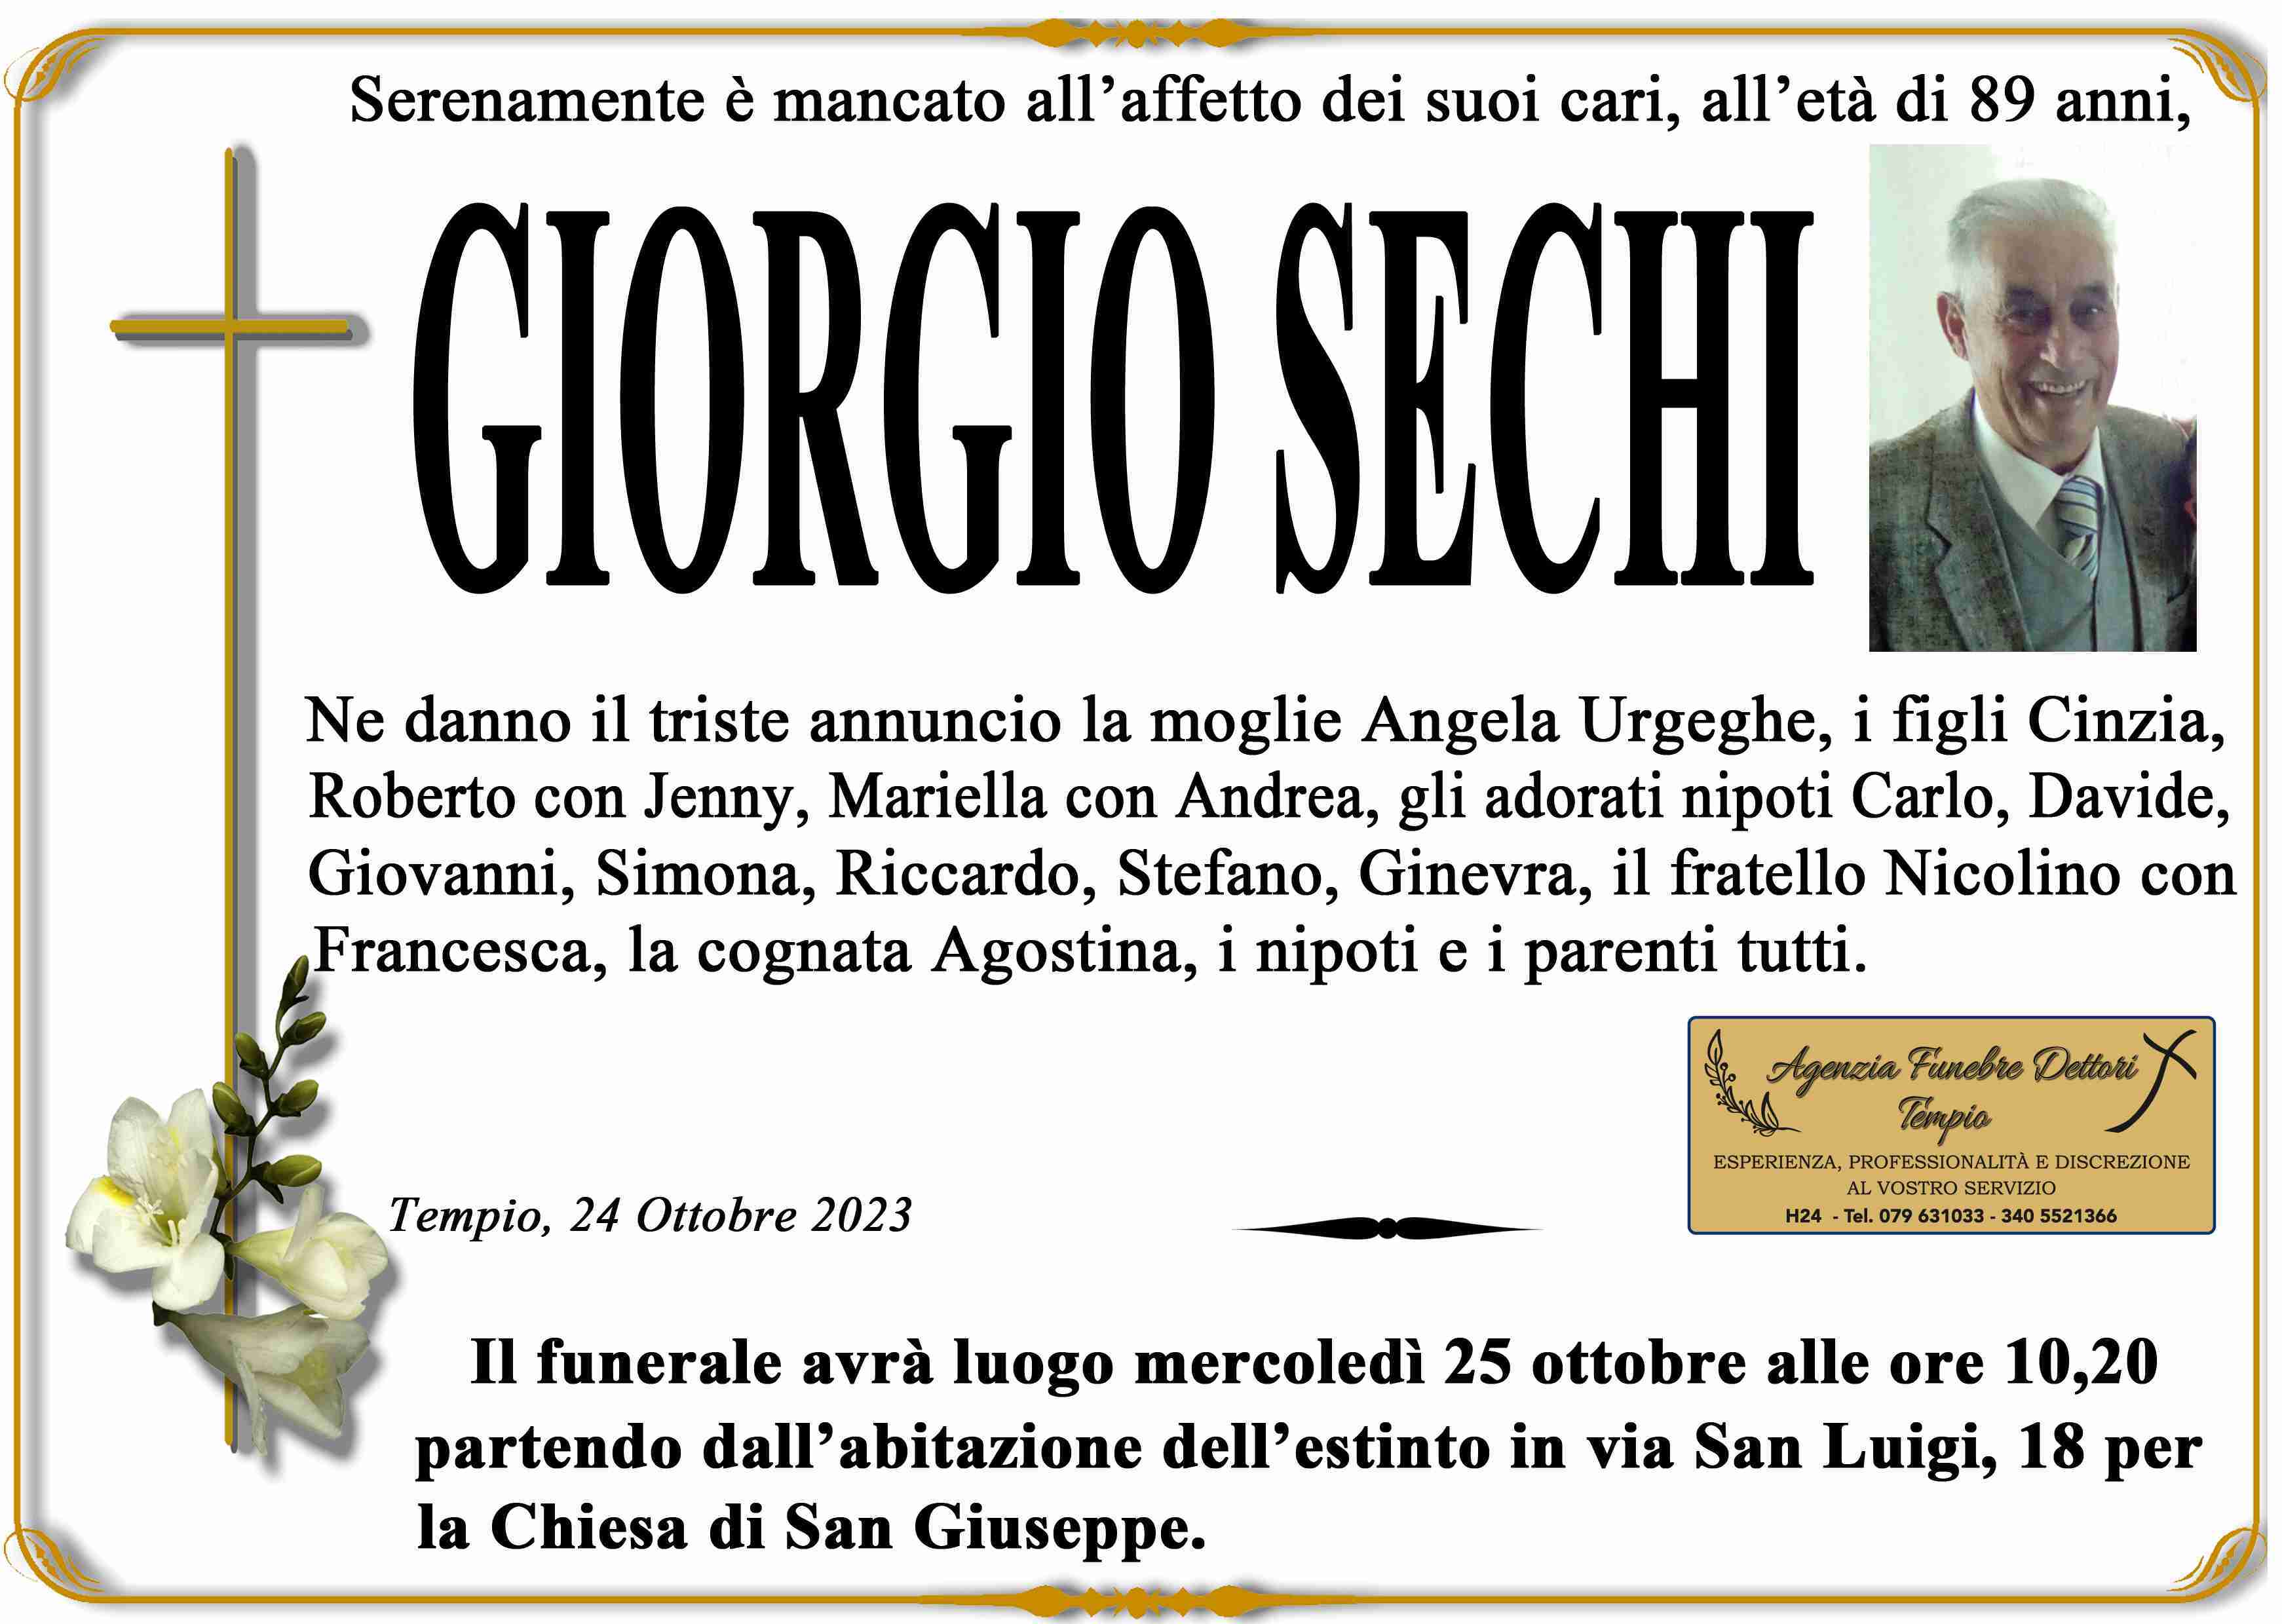 Giorgio Sechi